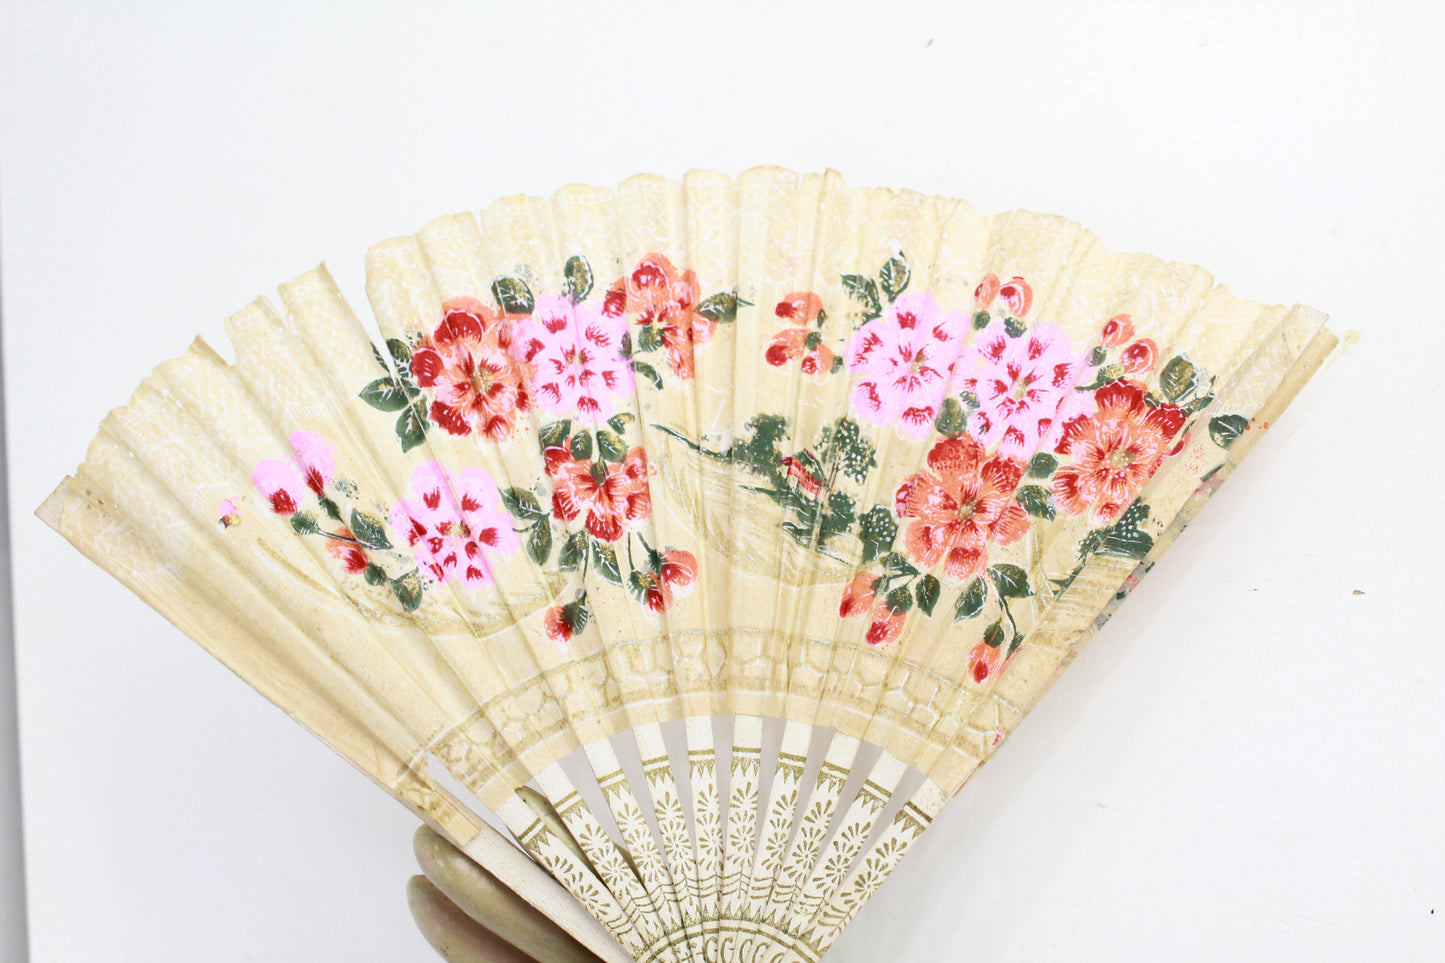 Antique Art Deco Hand Fan, Painted Floral Paper Fan 1920s Cherry Blossoms Painted Wood Frame, Vanity Decor